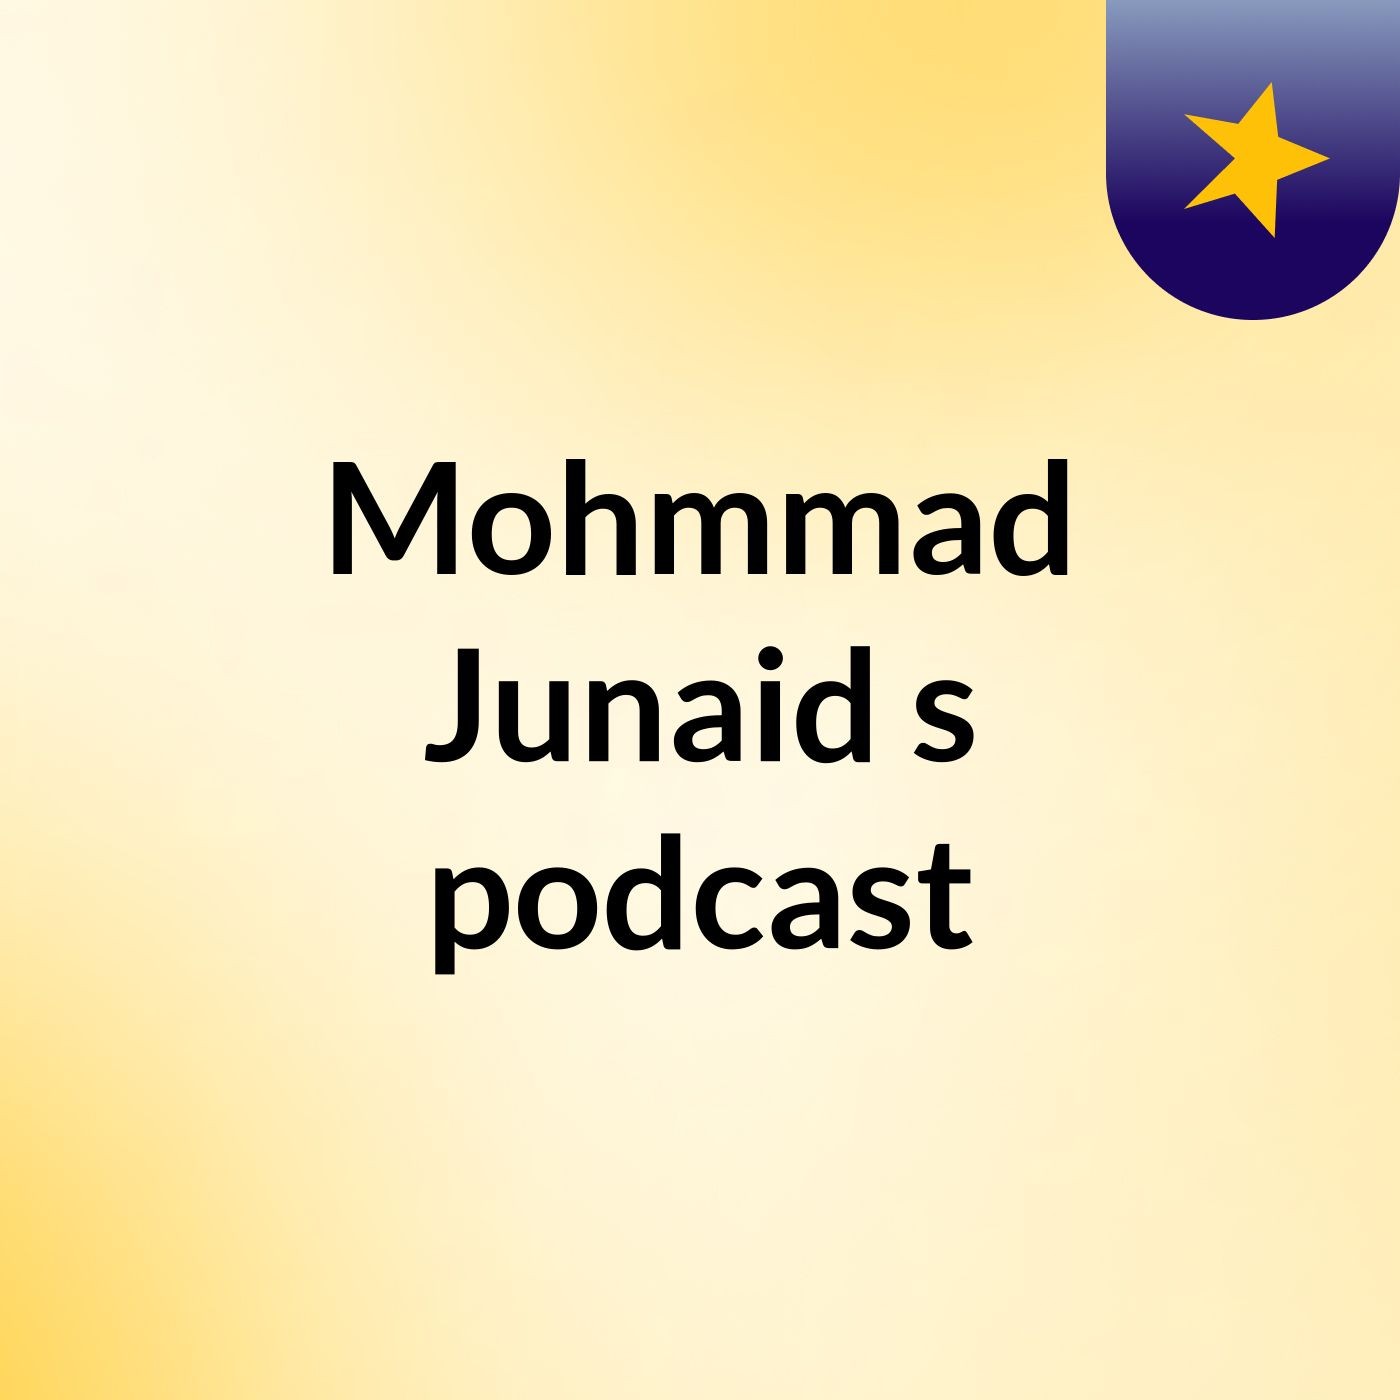 Episode 3 - Mohmmad Junaid's podcast